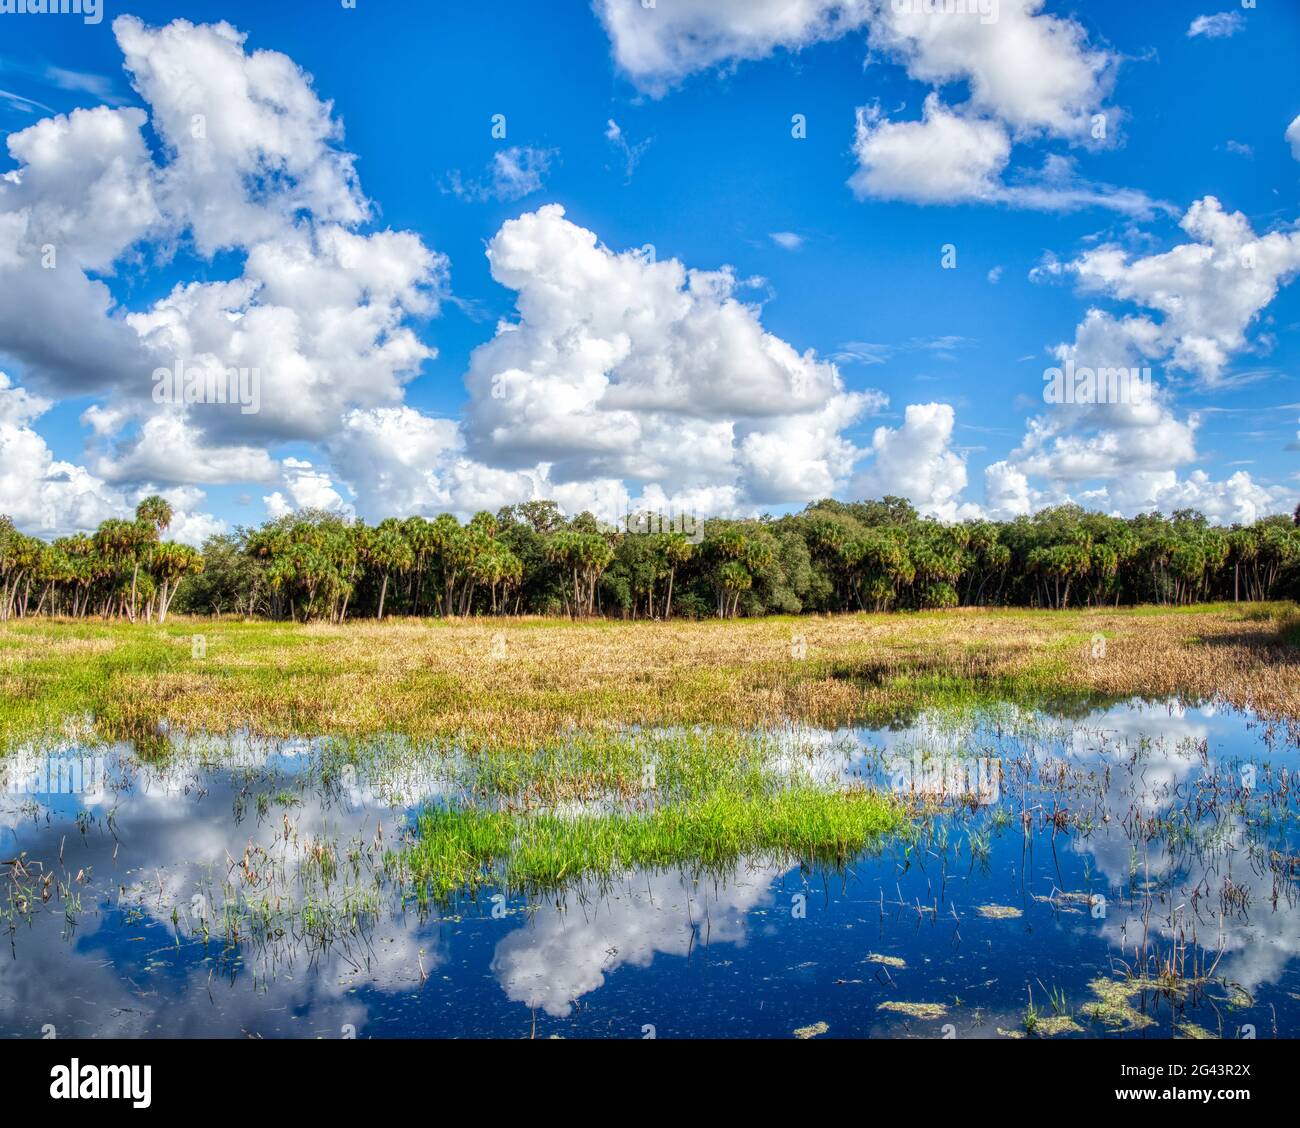 Paesaggio con palme e zone umide, Myakka River state Park, Sarasota, Florida, Stati Uniti Foto Stock